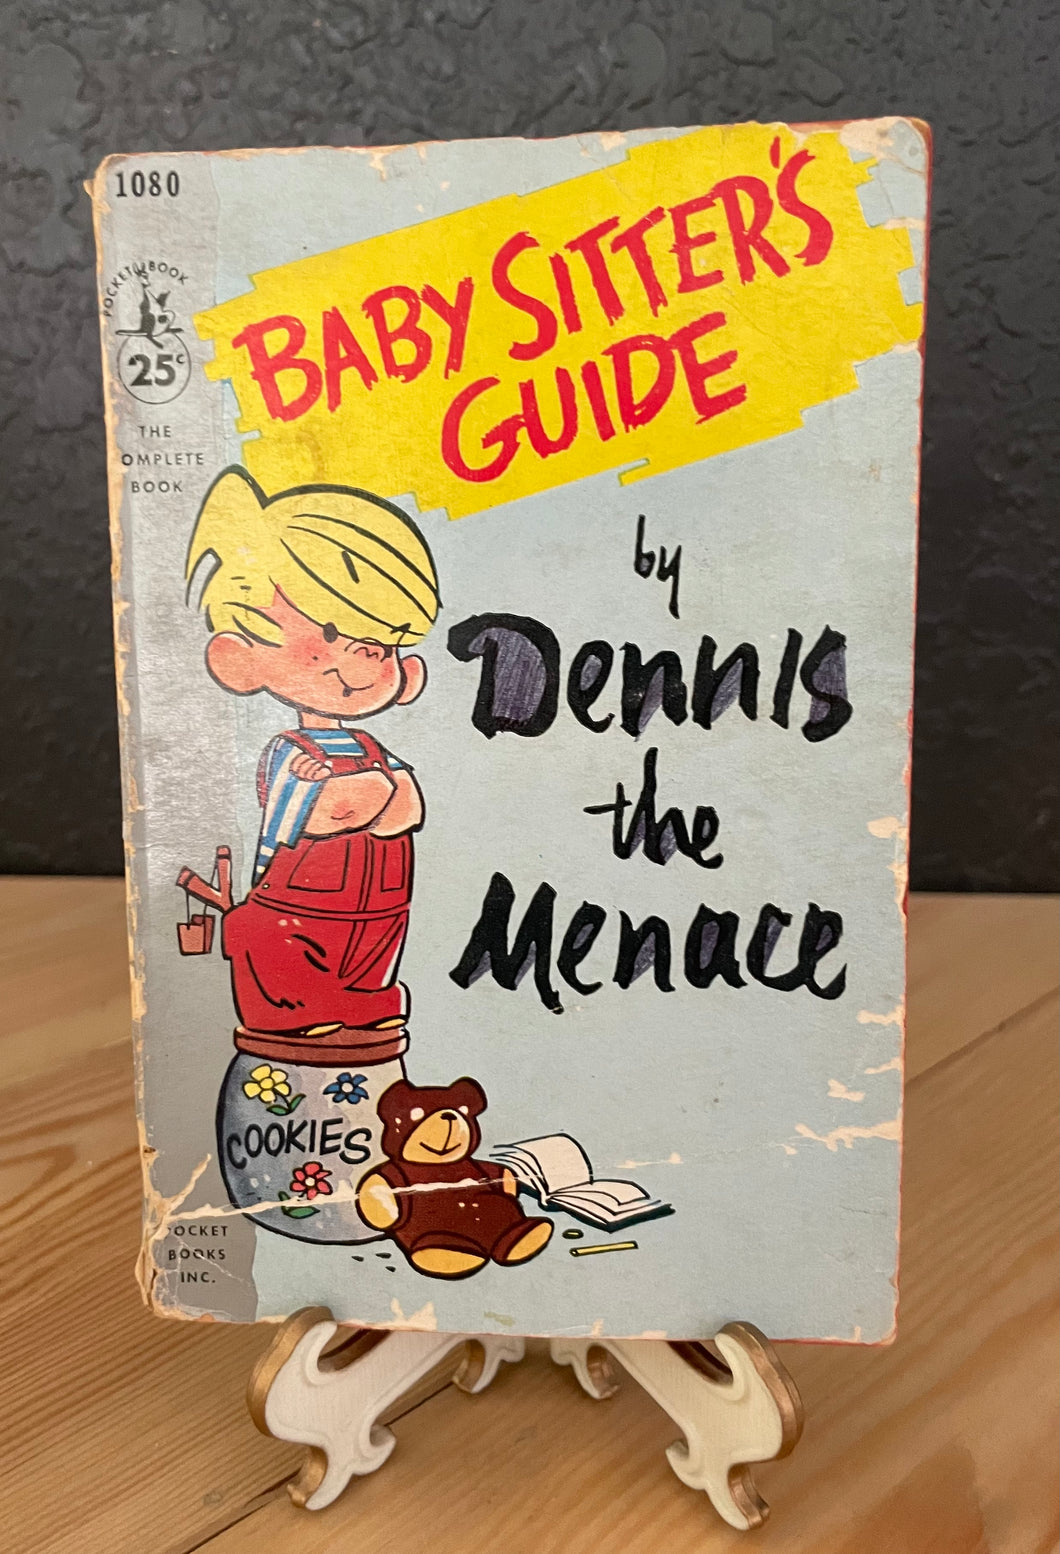 1954 “Babysitter’s Guide By Dennis the Menace” Vintage Paperback Book